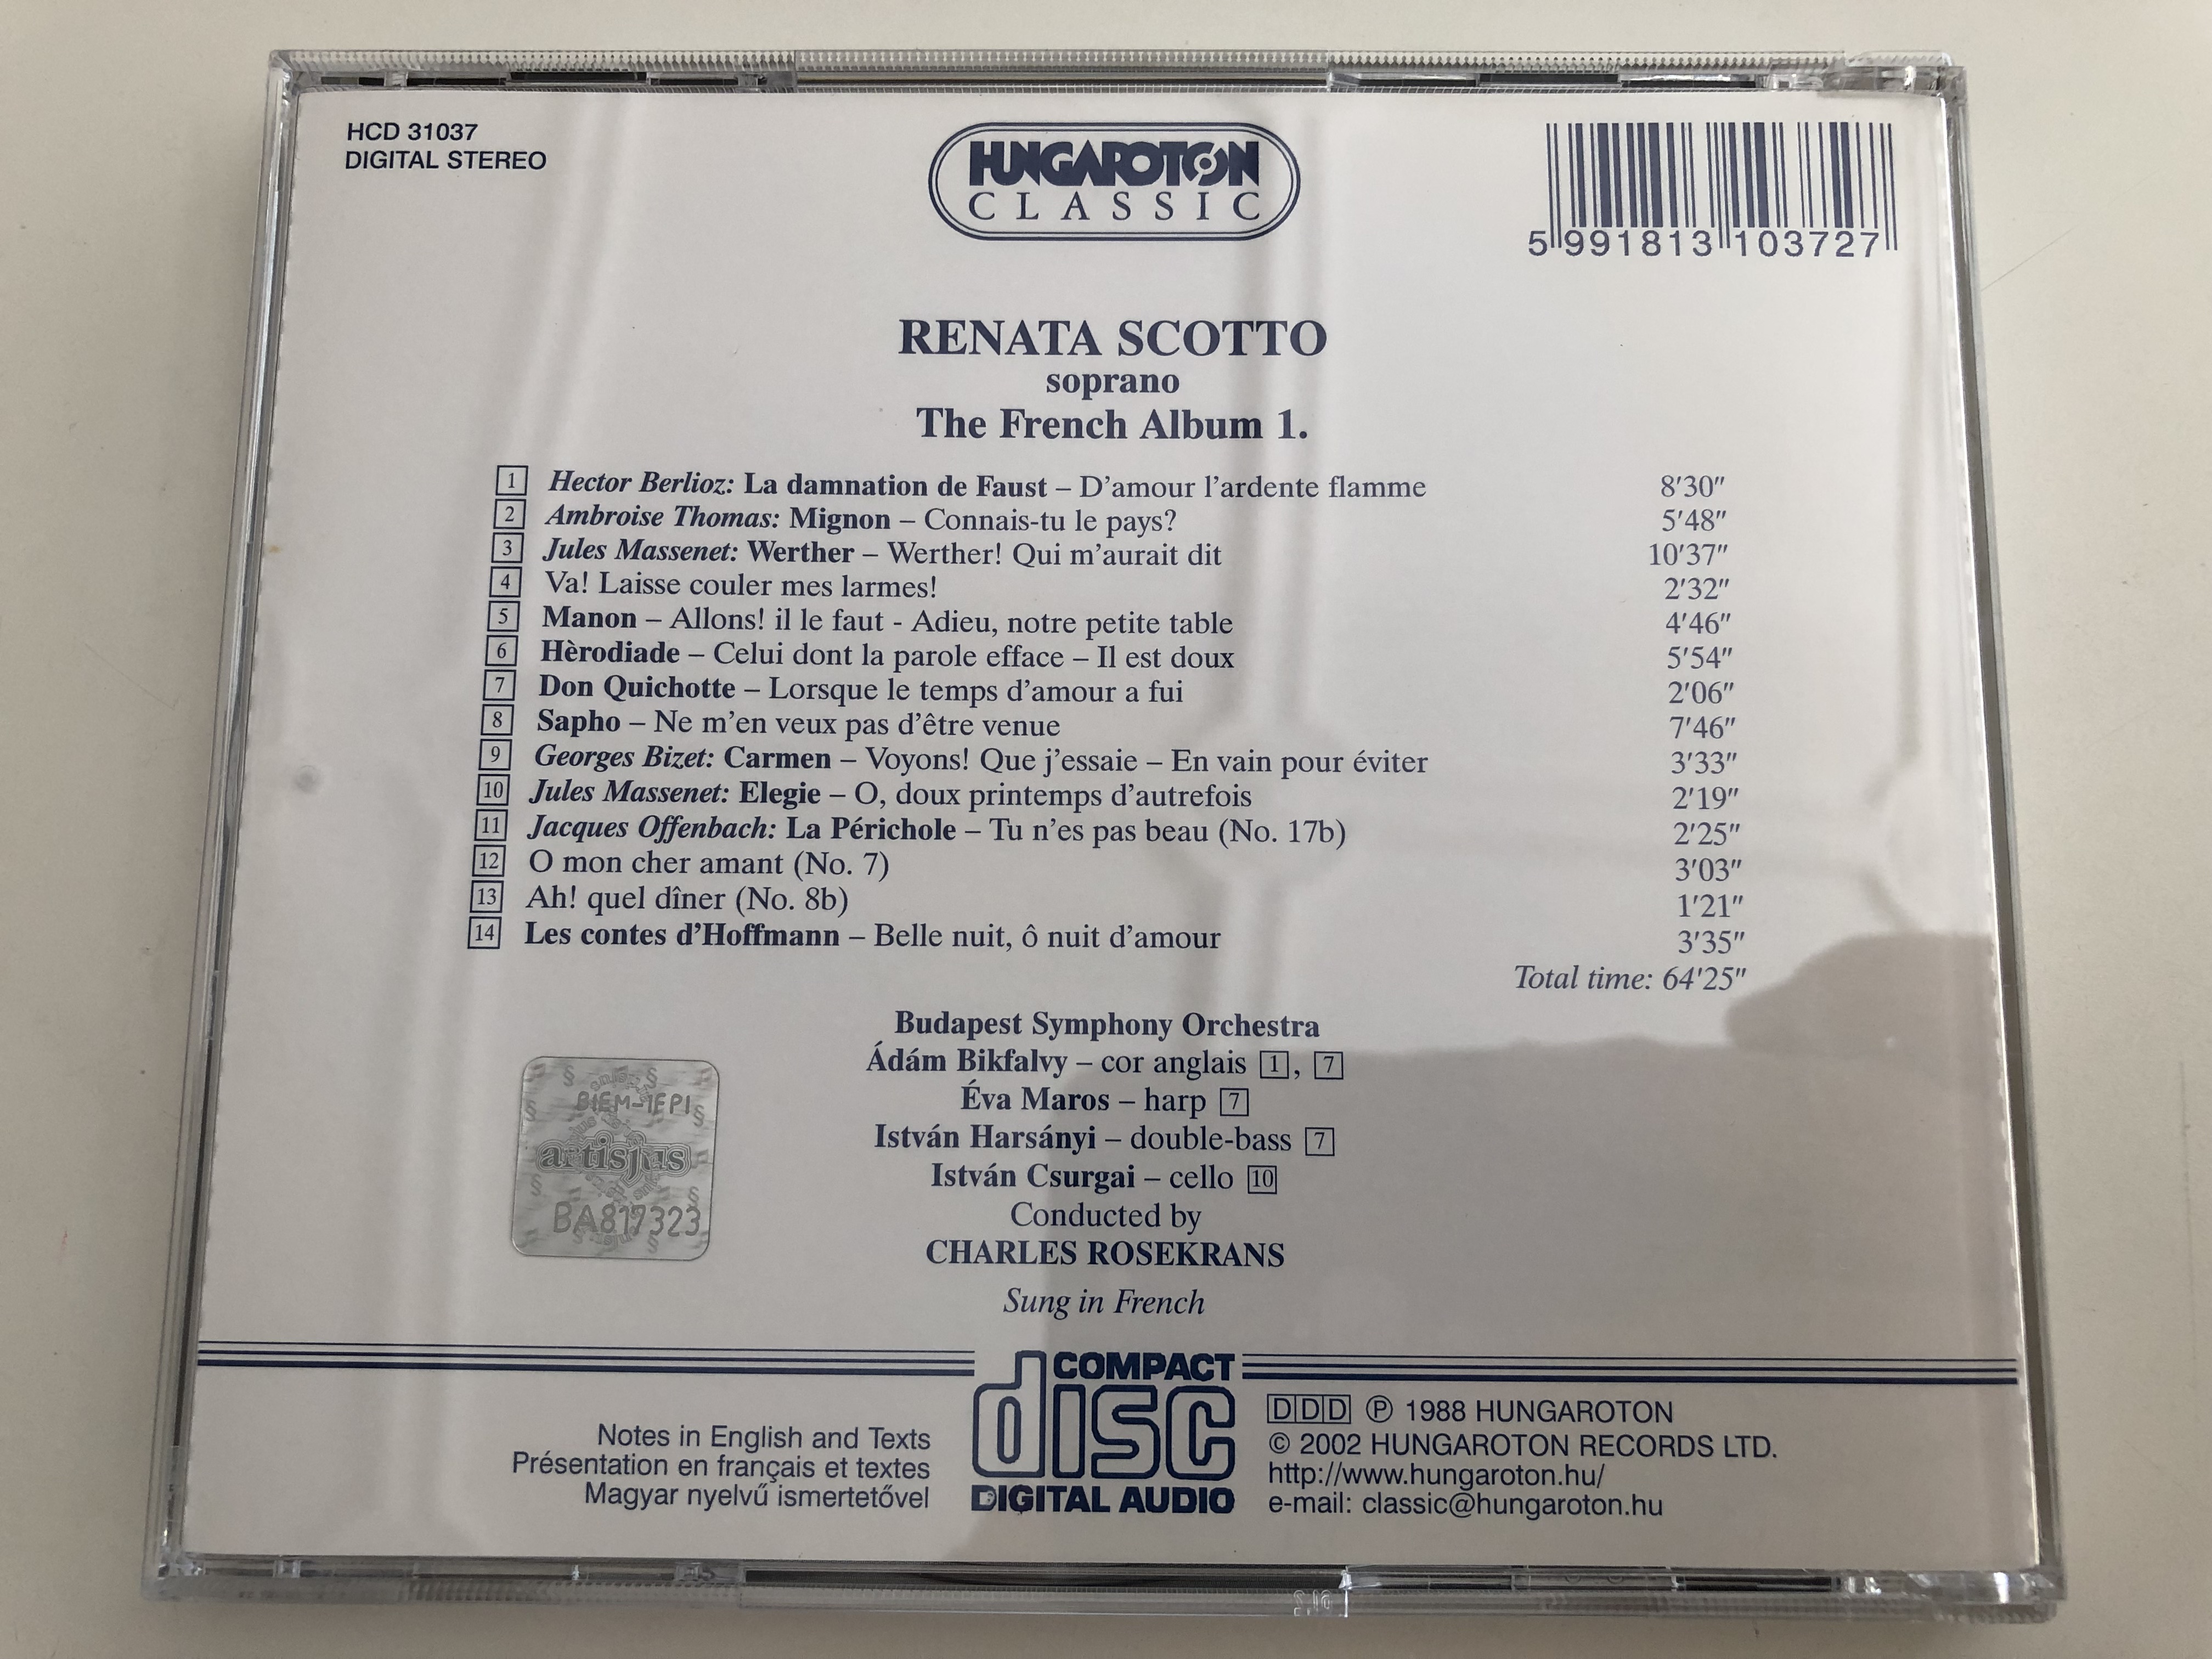 renata-scotto-the-french-album-1-berlioz-thomas-massenet-bizet-offenbach-budapest-symphony-orchestra-conducted-by-charles-rosekrans-hungaroton-classic-audio-cd-2002-hcd-31037-11-.jpg